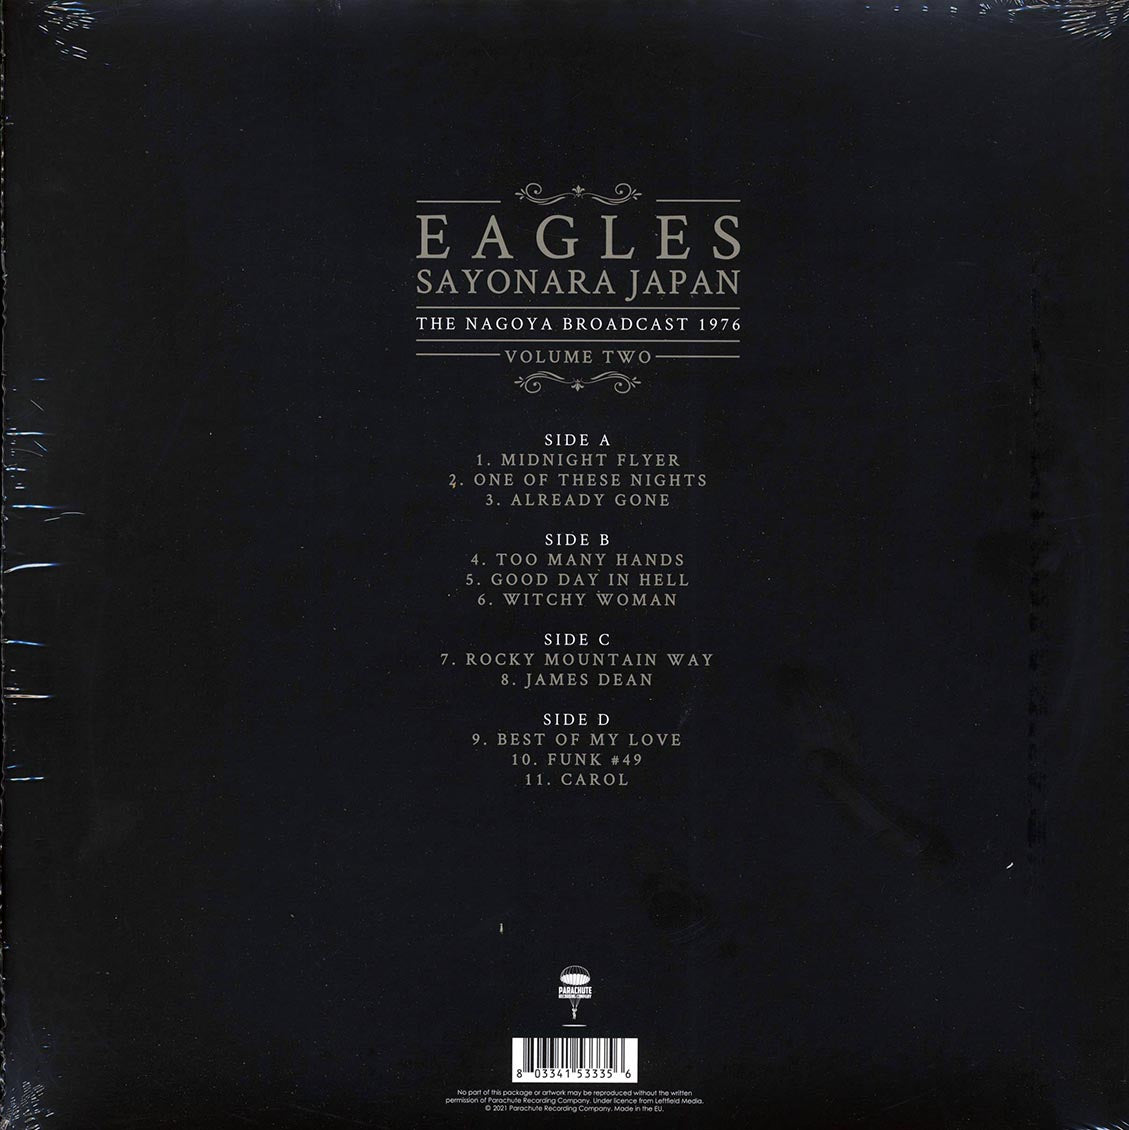 Eagles - Sayonara Japan Volume 2: The Nagoya Broadcast 1976 (2xLP) - Vinyl LP, LP